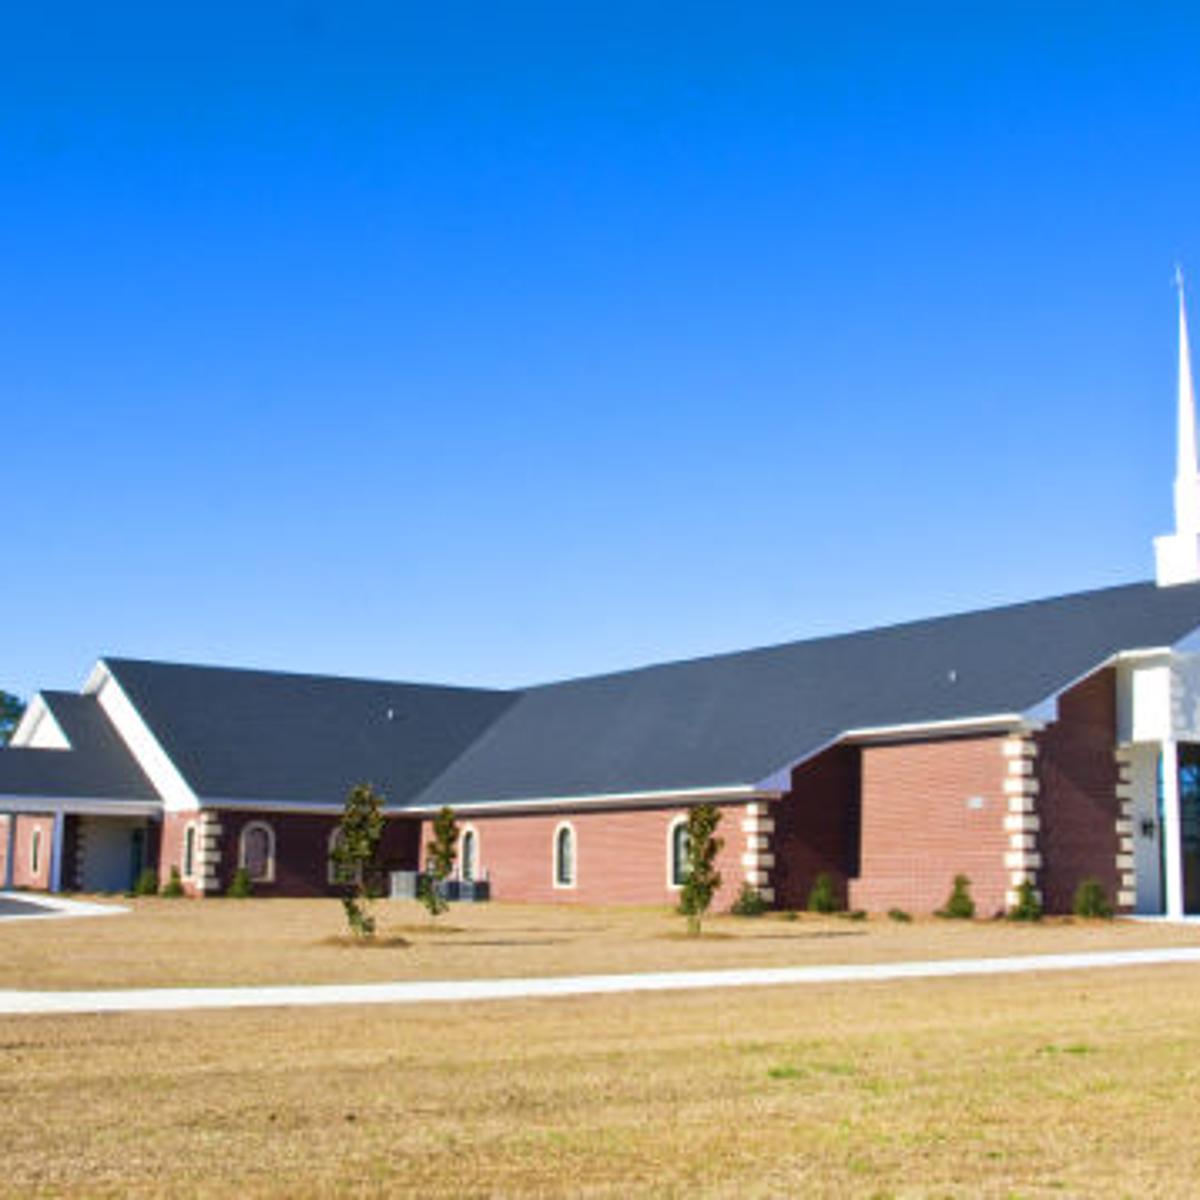 A New Church Facility For Morning Star Baptist | Lifestyles | Valdostadailytimes.com